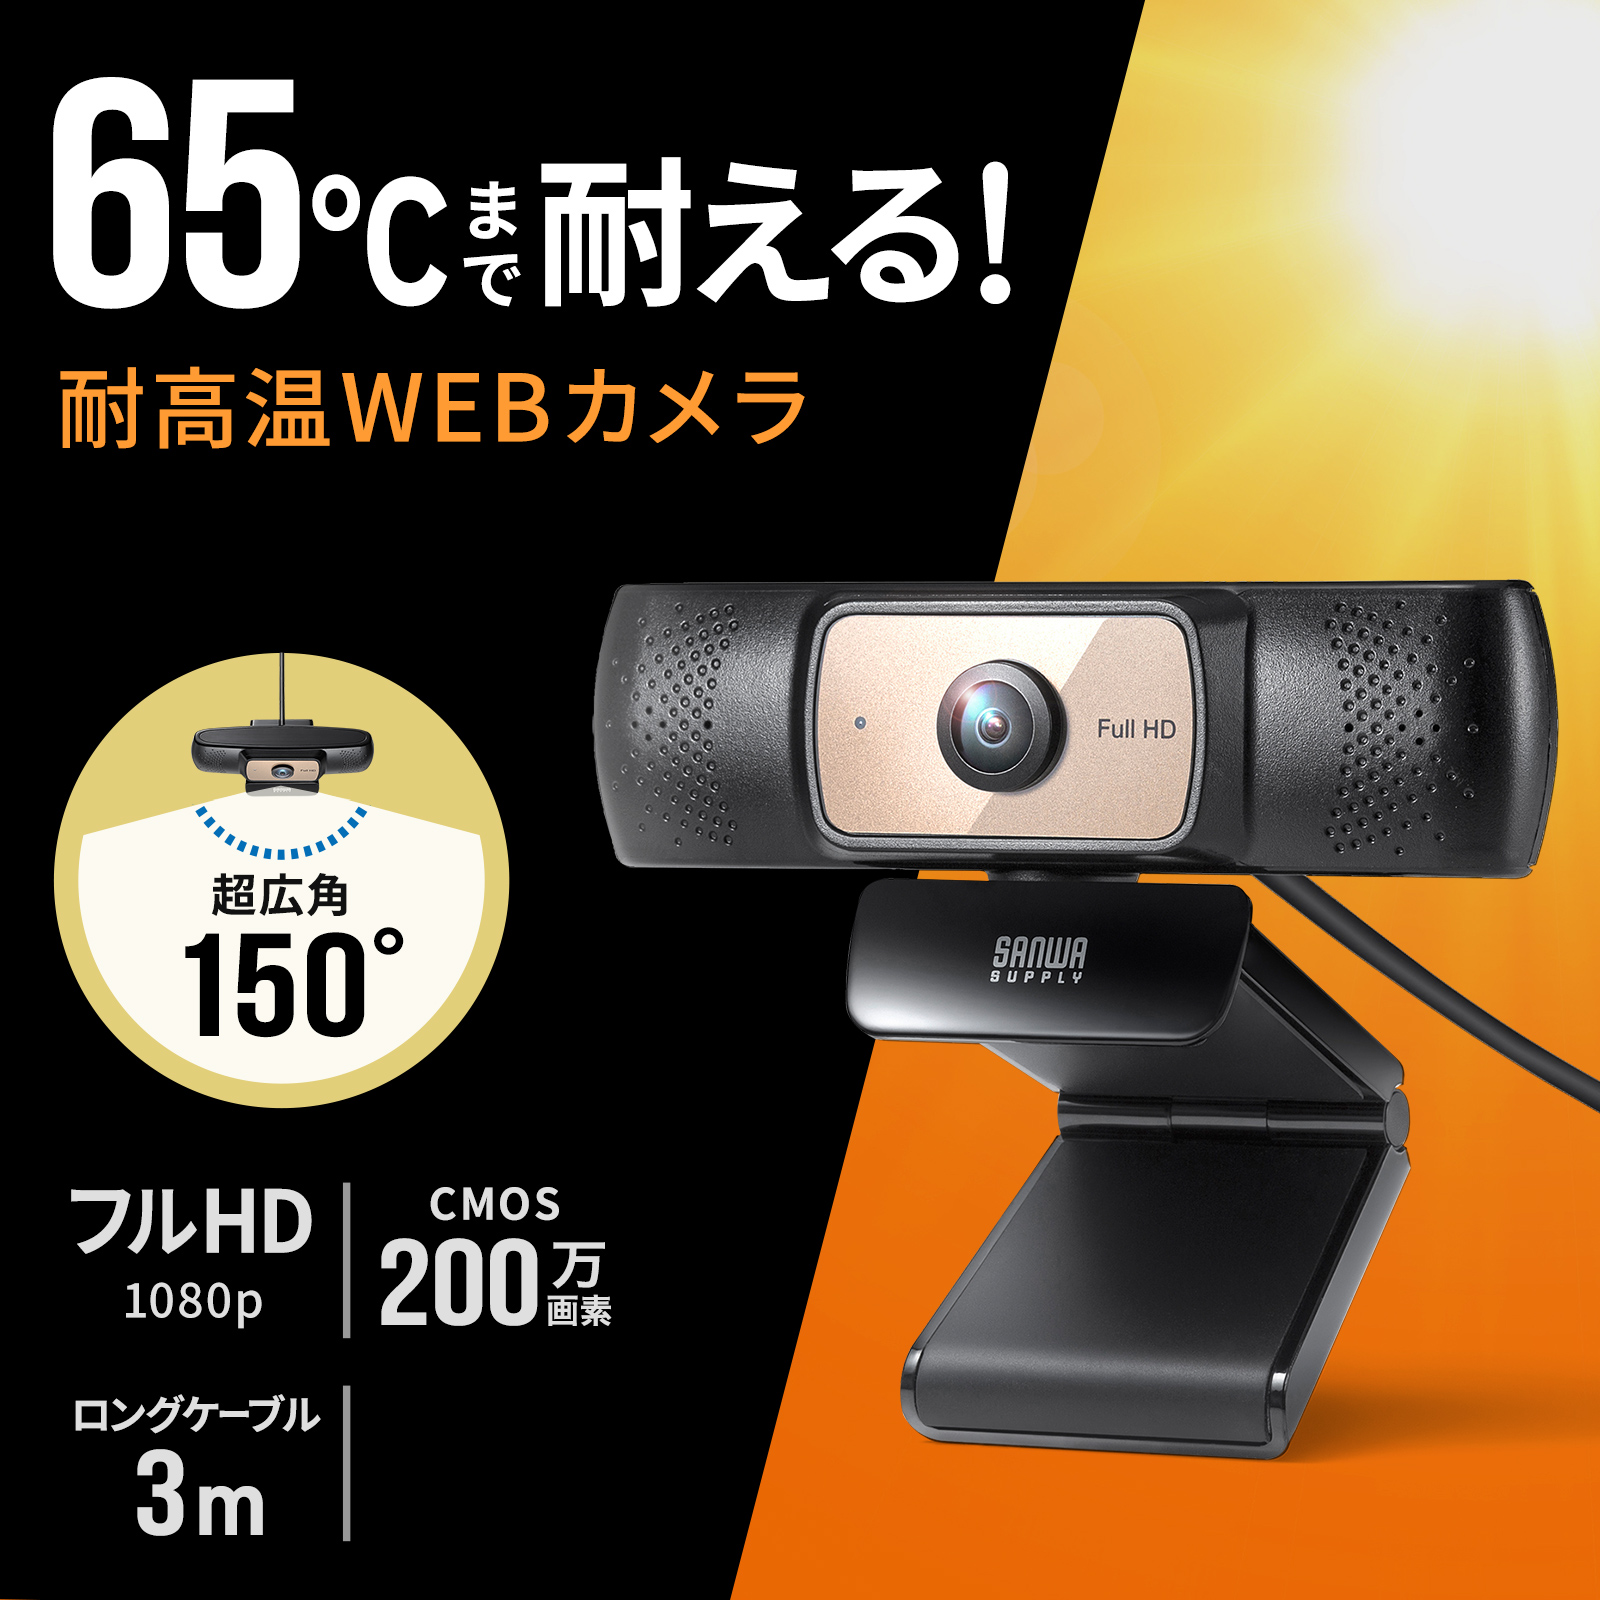 CMS-V70BK【耐高温広角WEBカメラ】高温の環境下でも使用できる耐高温の